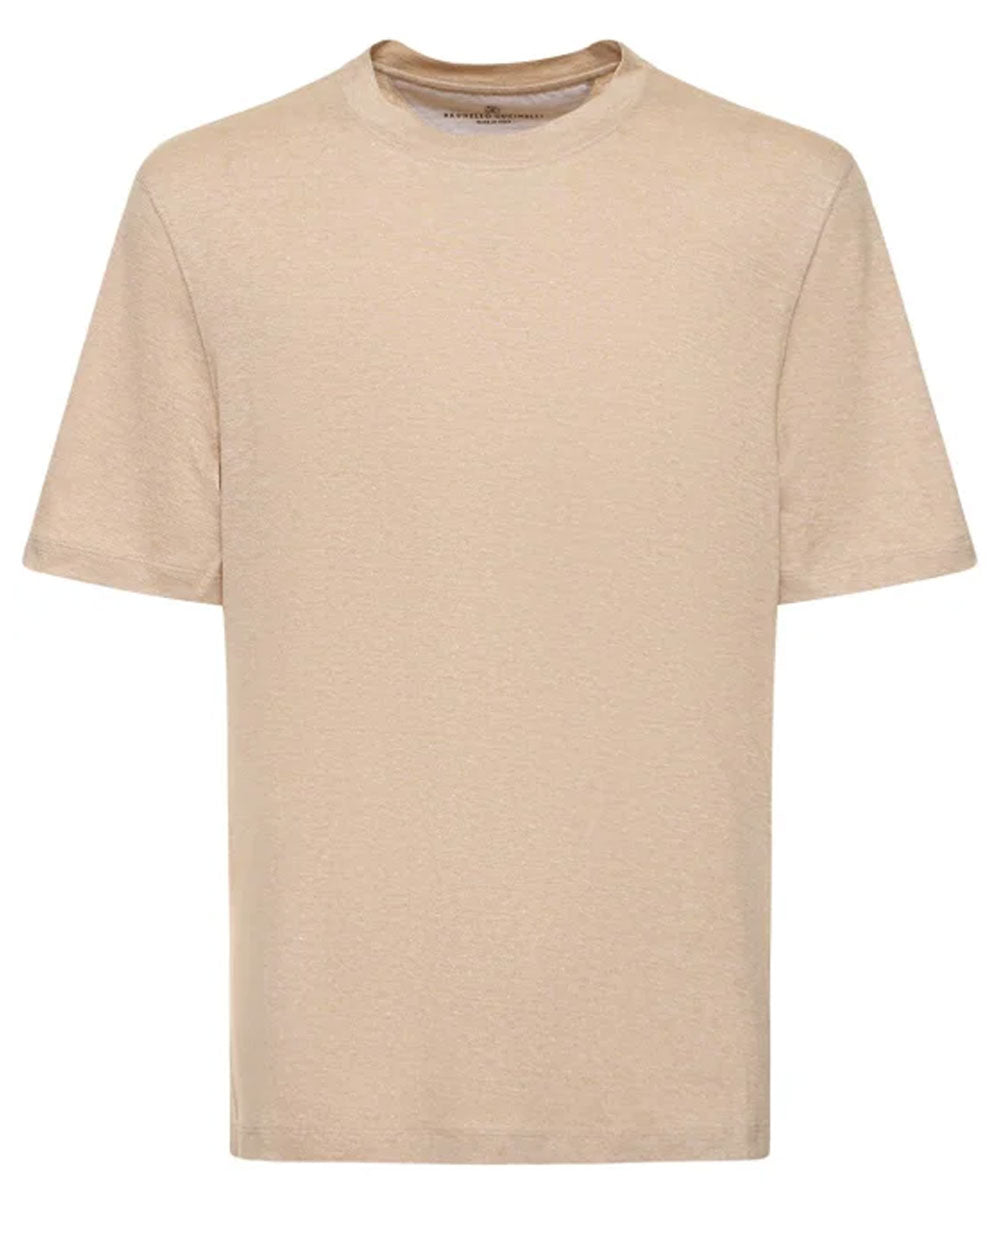 Creta Short Sleeve Shirt